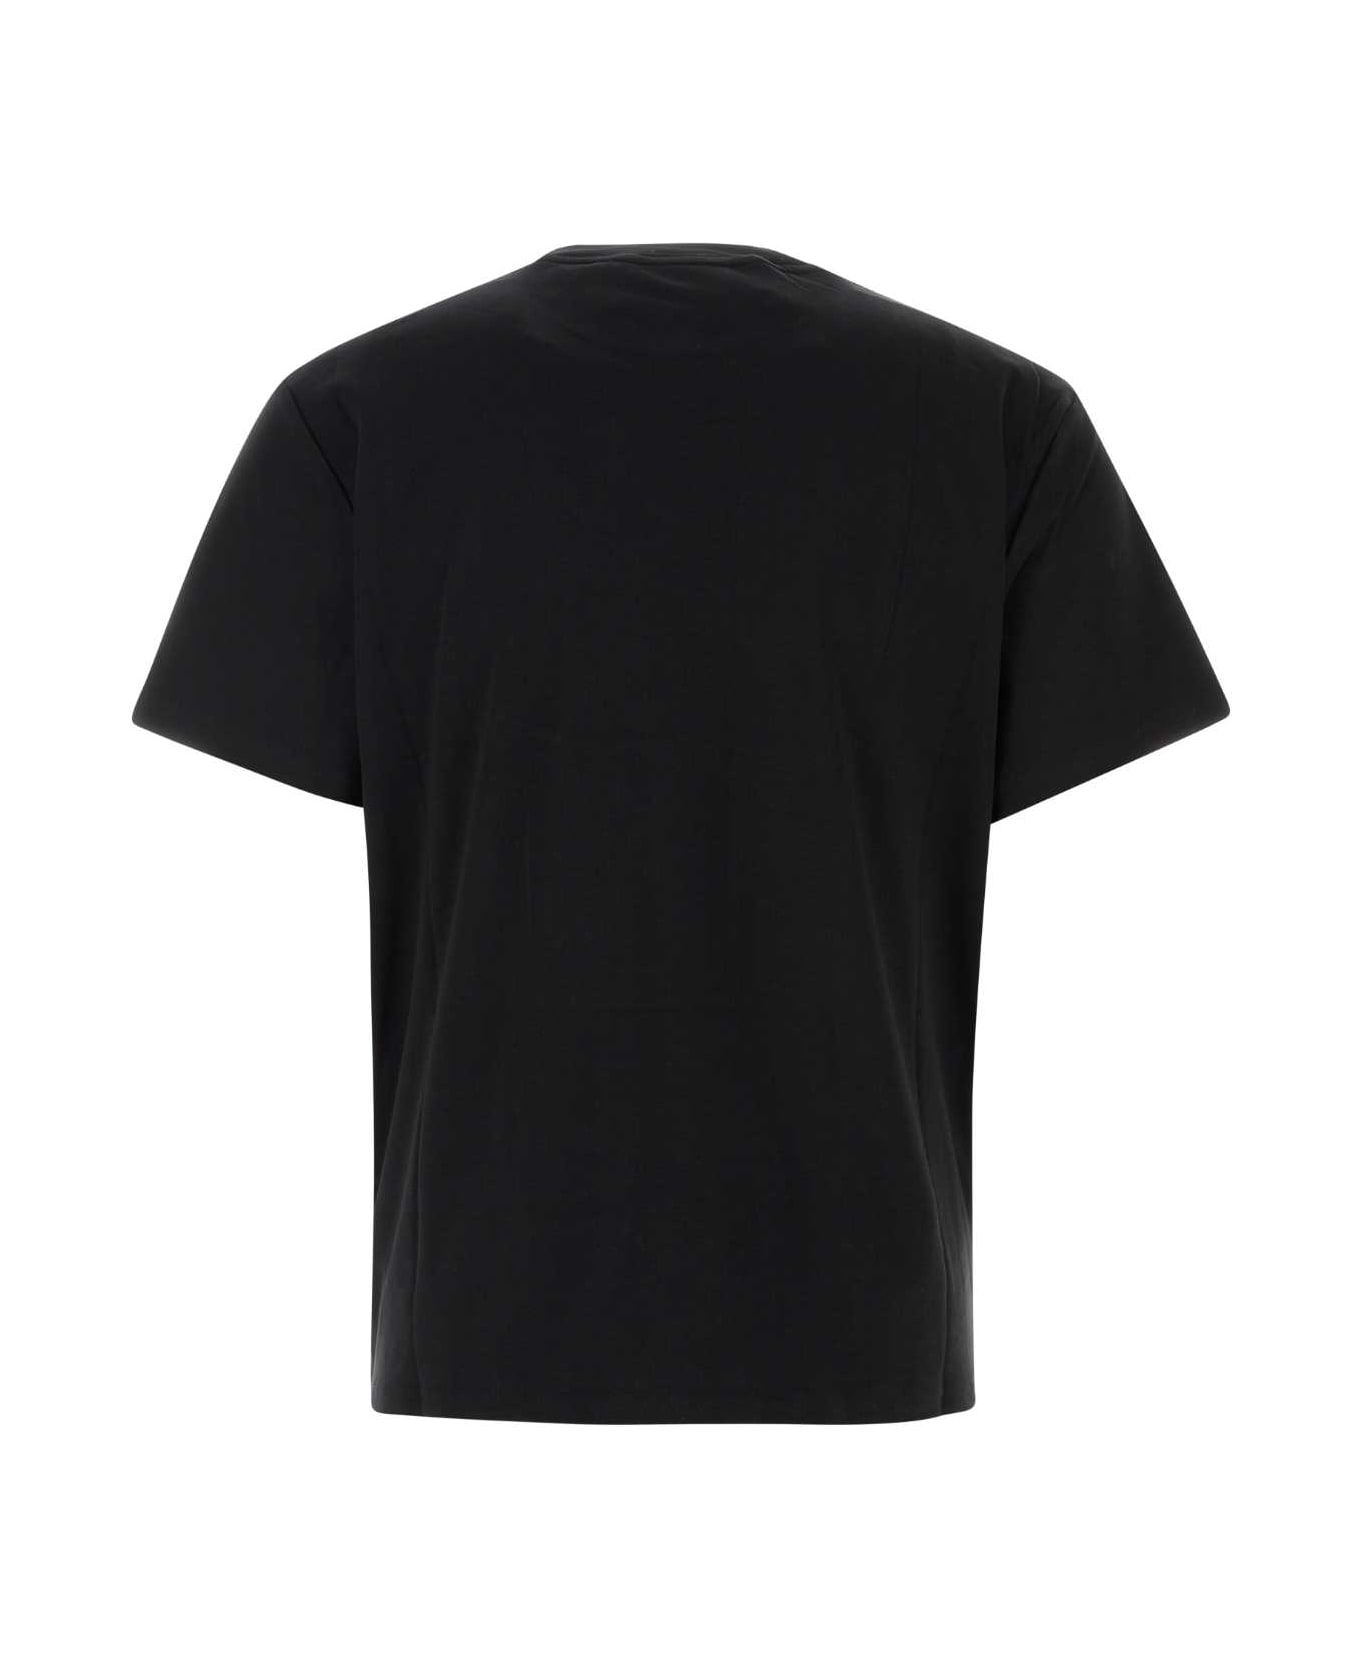 GCDS Black Cotton T-shirt - 02